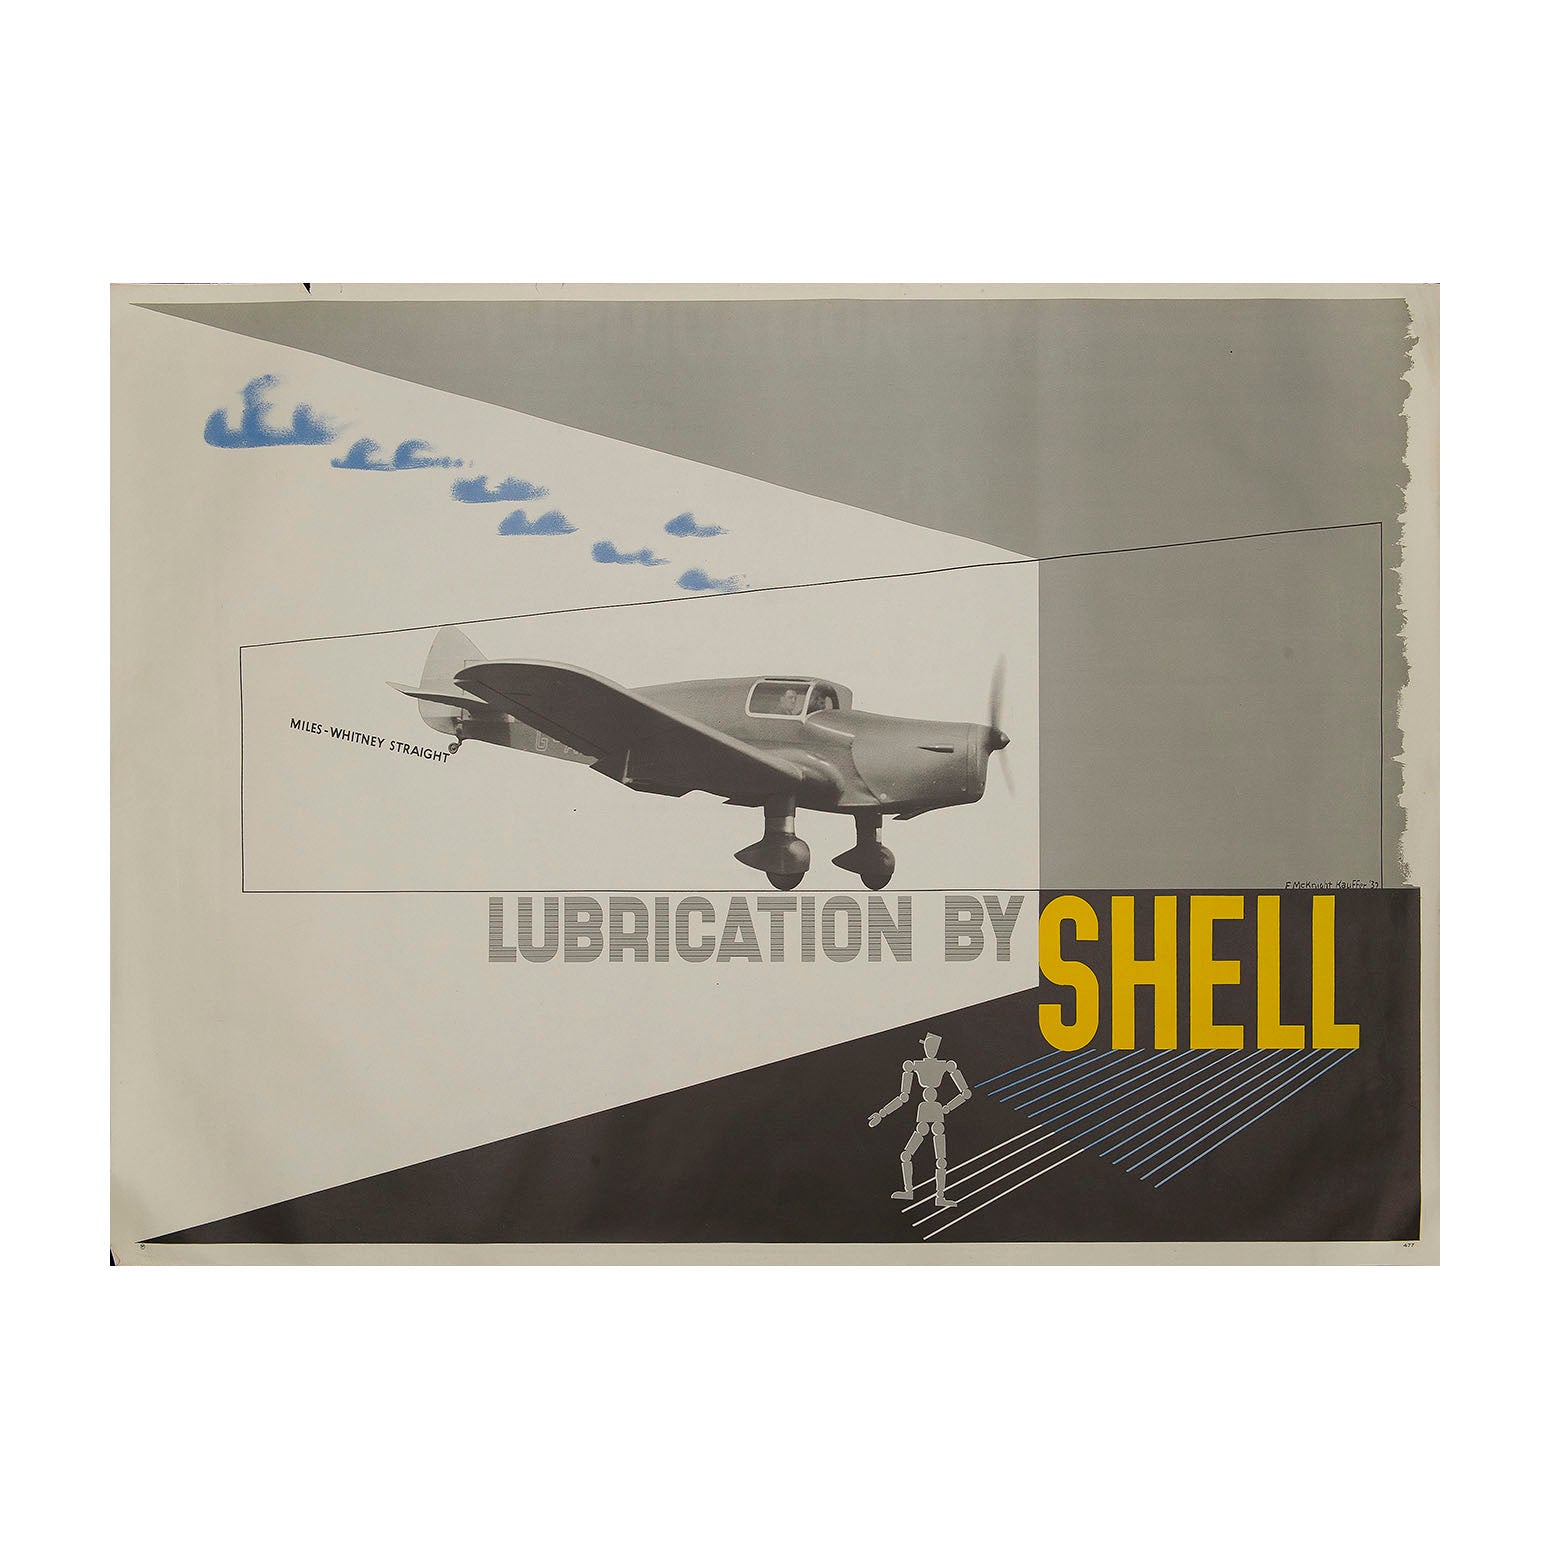 Original poster: Lubrication by Shell. Miles-Whitney Straight, by Edward McKnight Kauffer 1937. Features a Miles-Whitney Straight monoplane 